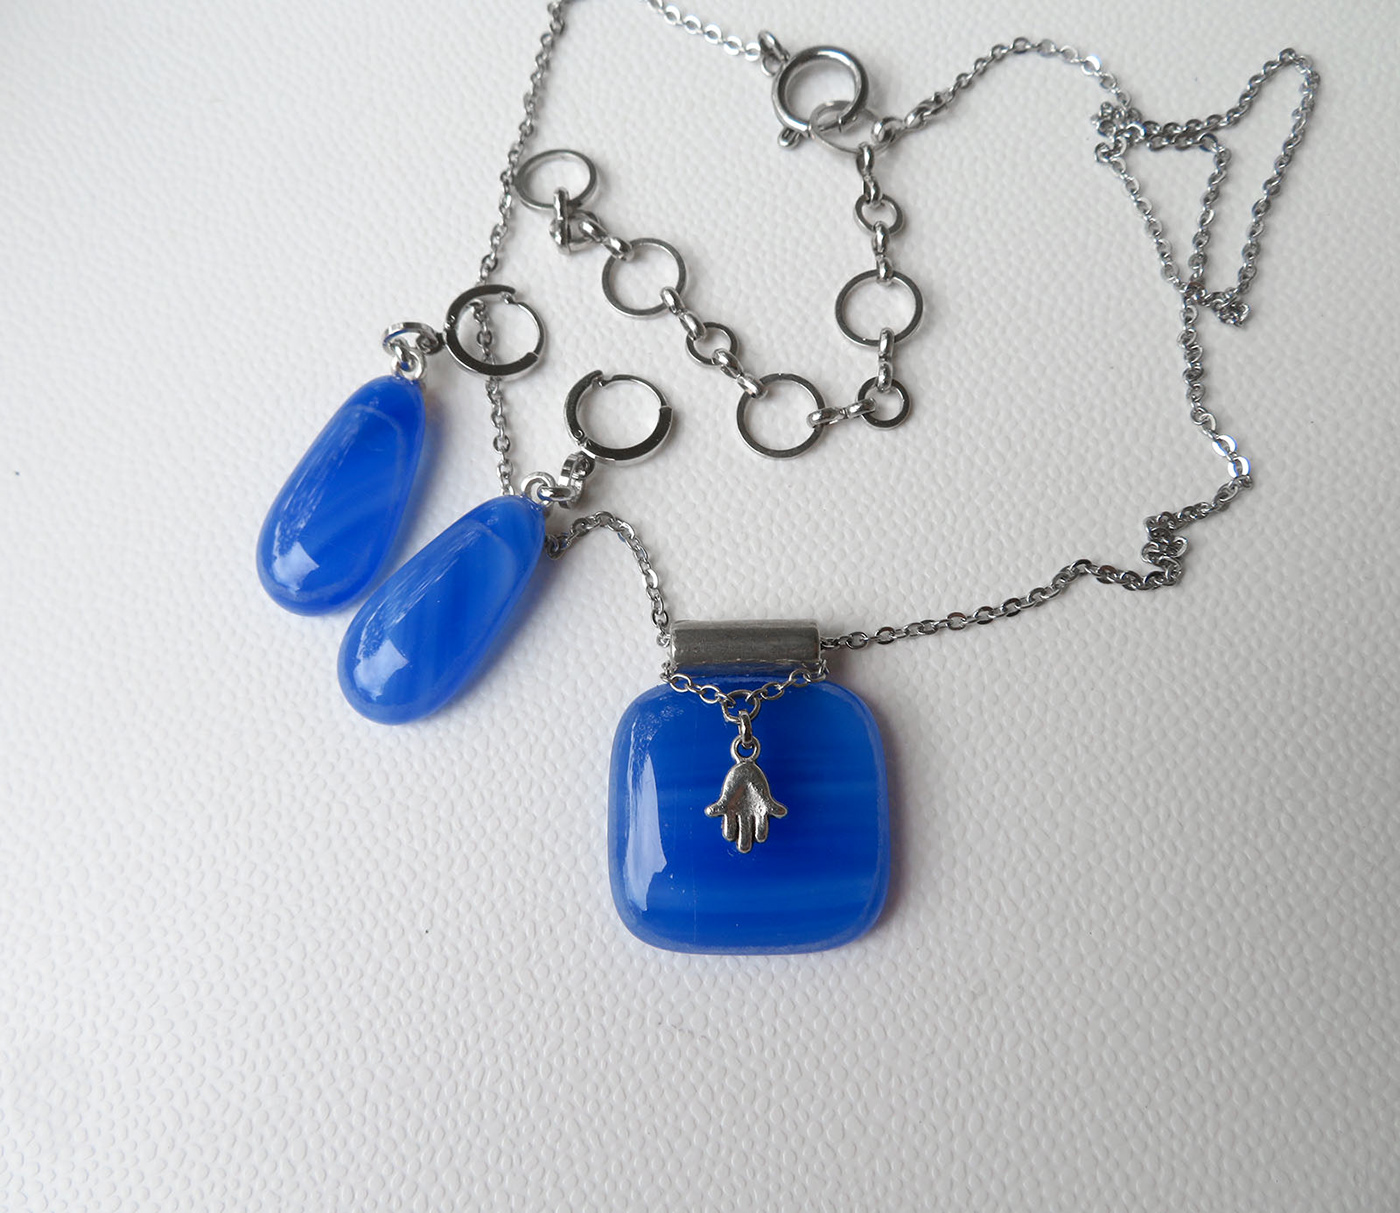 Glass fusing fused glass Glass Jewellery jewelry set earrings pendant Necklace handmade Blue Earrings Blue Pendant